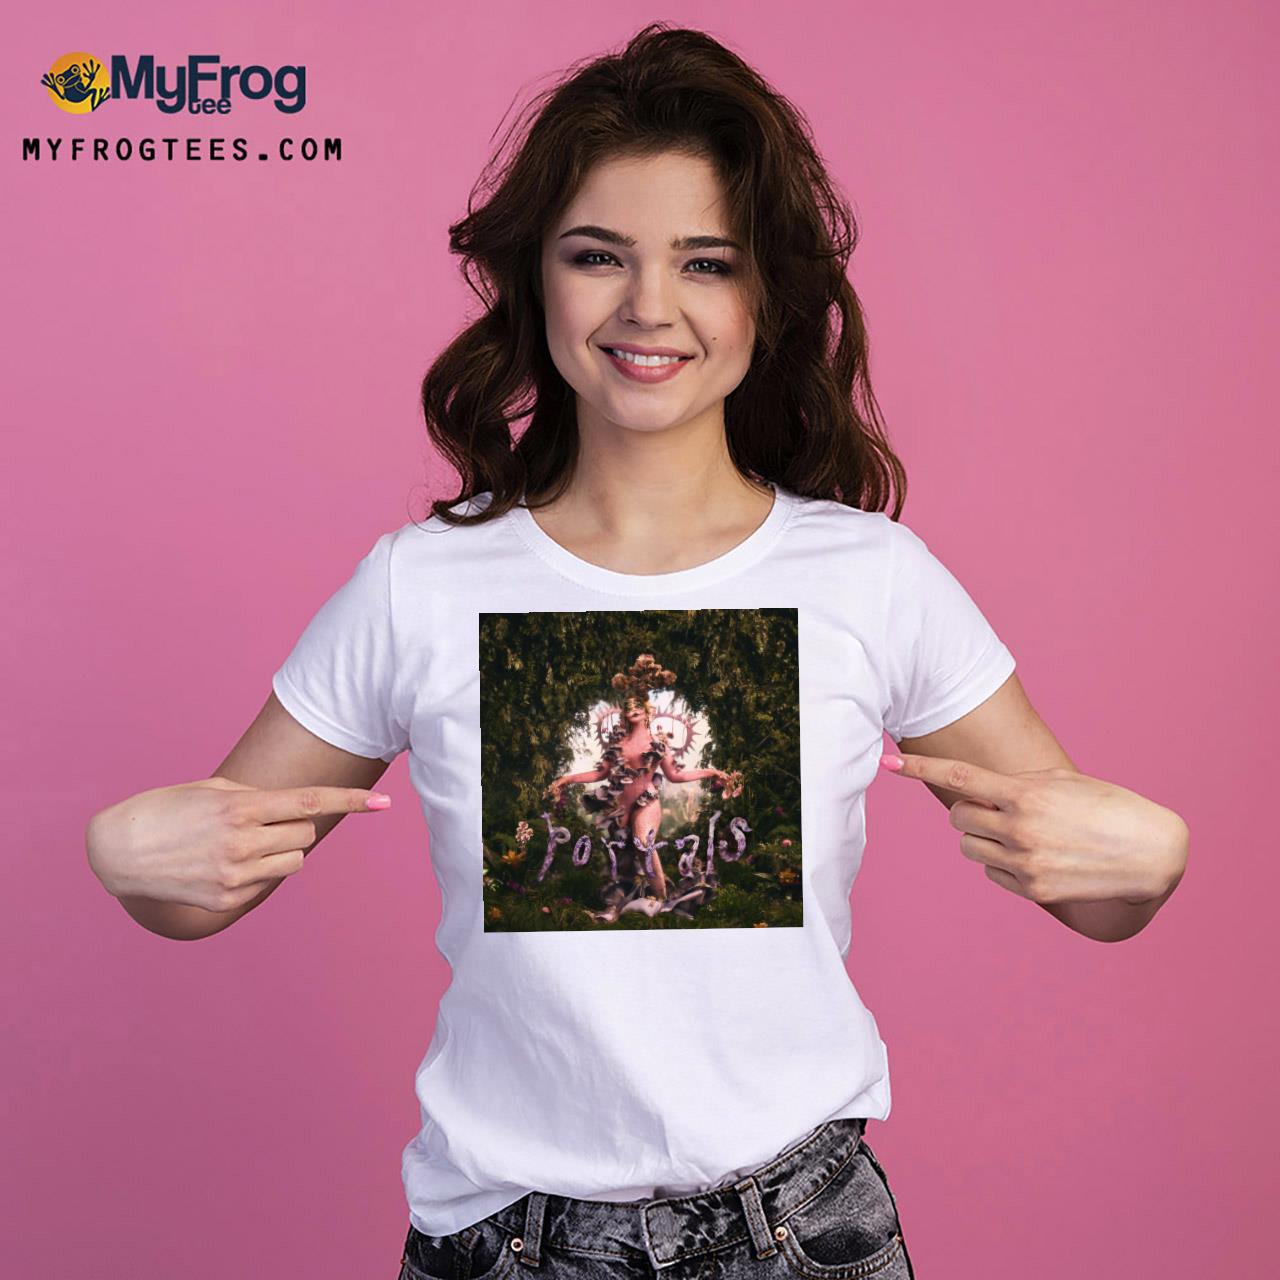 Melanie Martinez Shirt, Portals Album Tee Tops T-Shirt